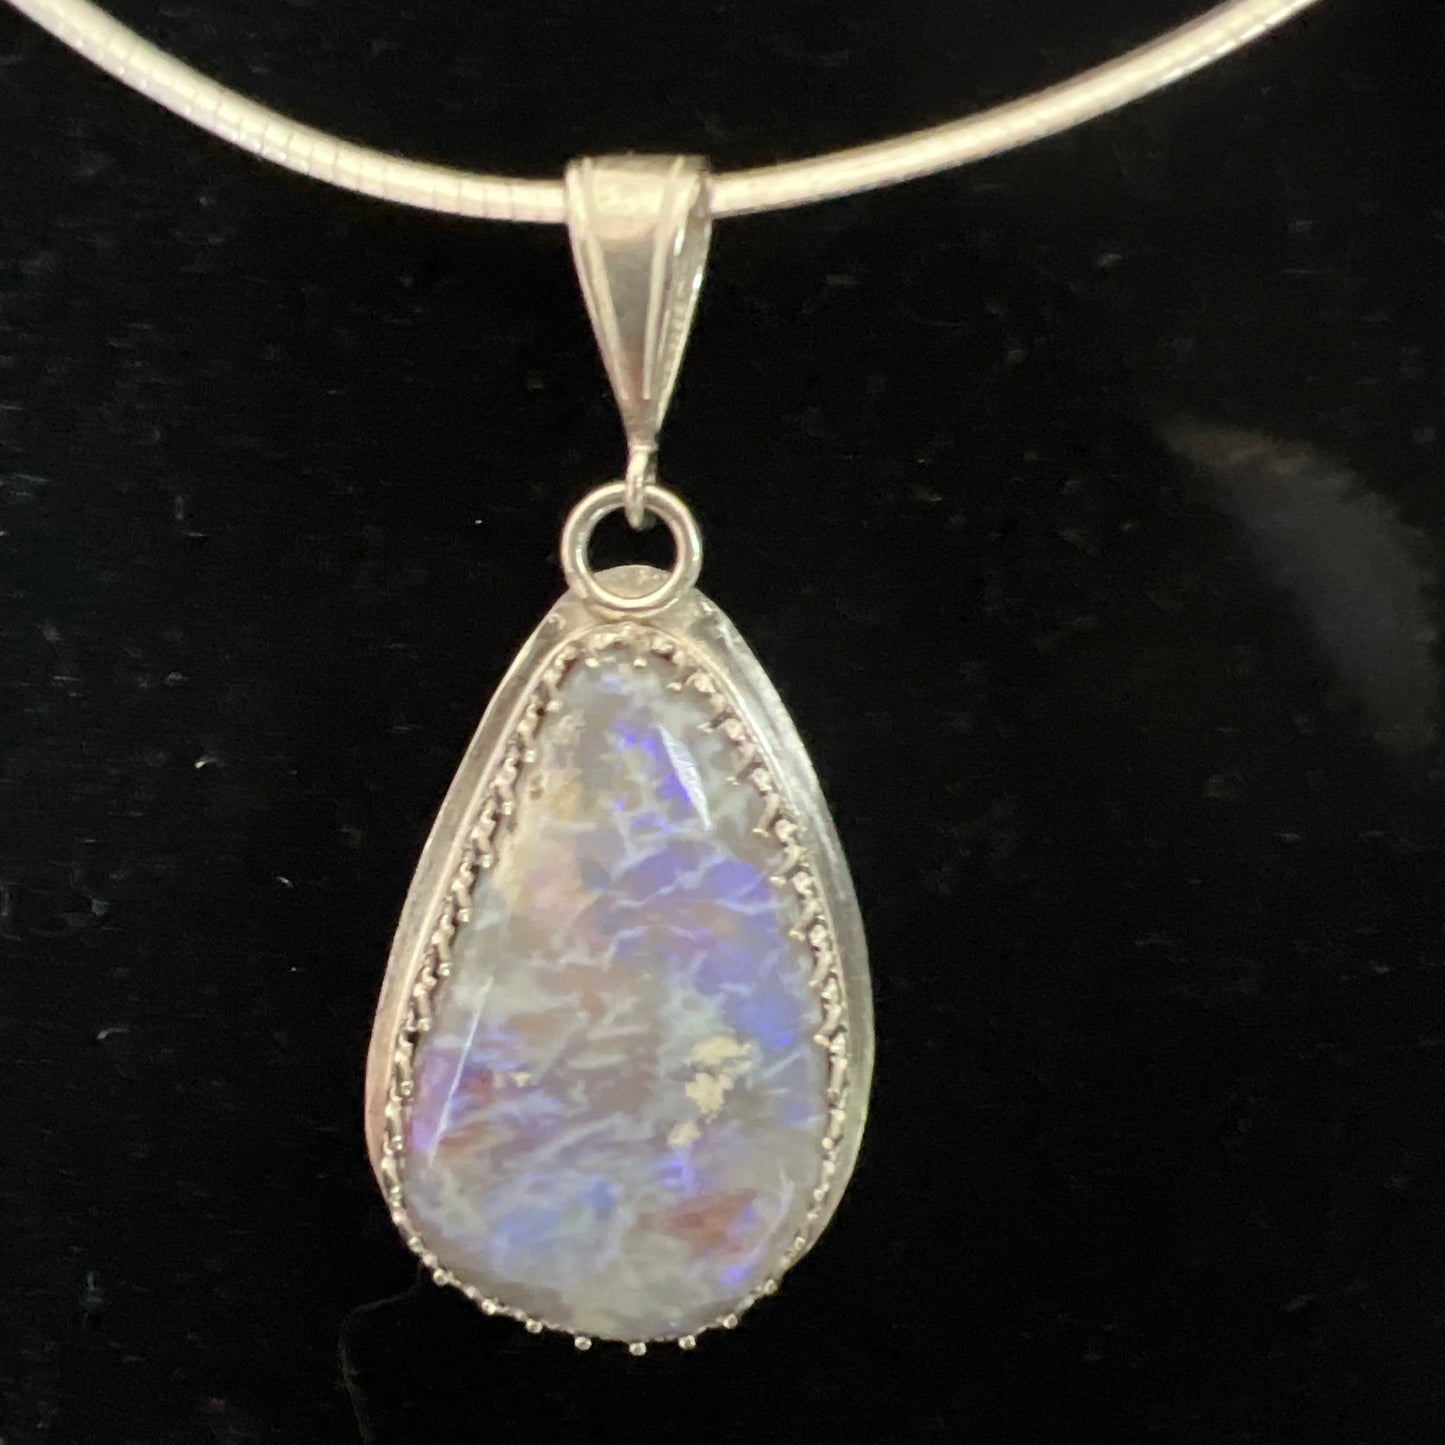 Oval opal pendant on omega chain